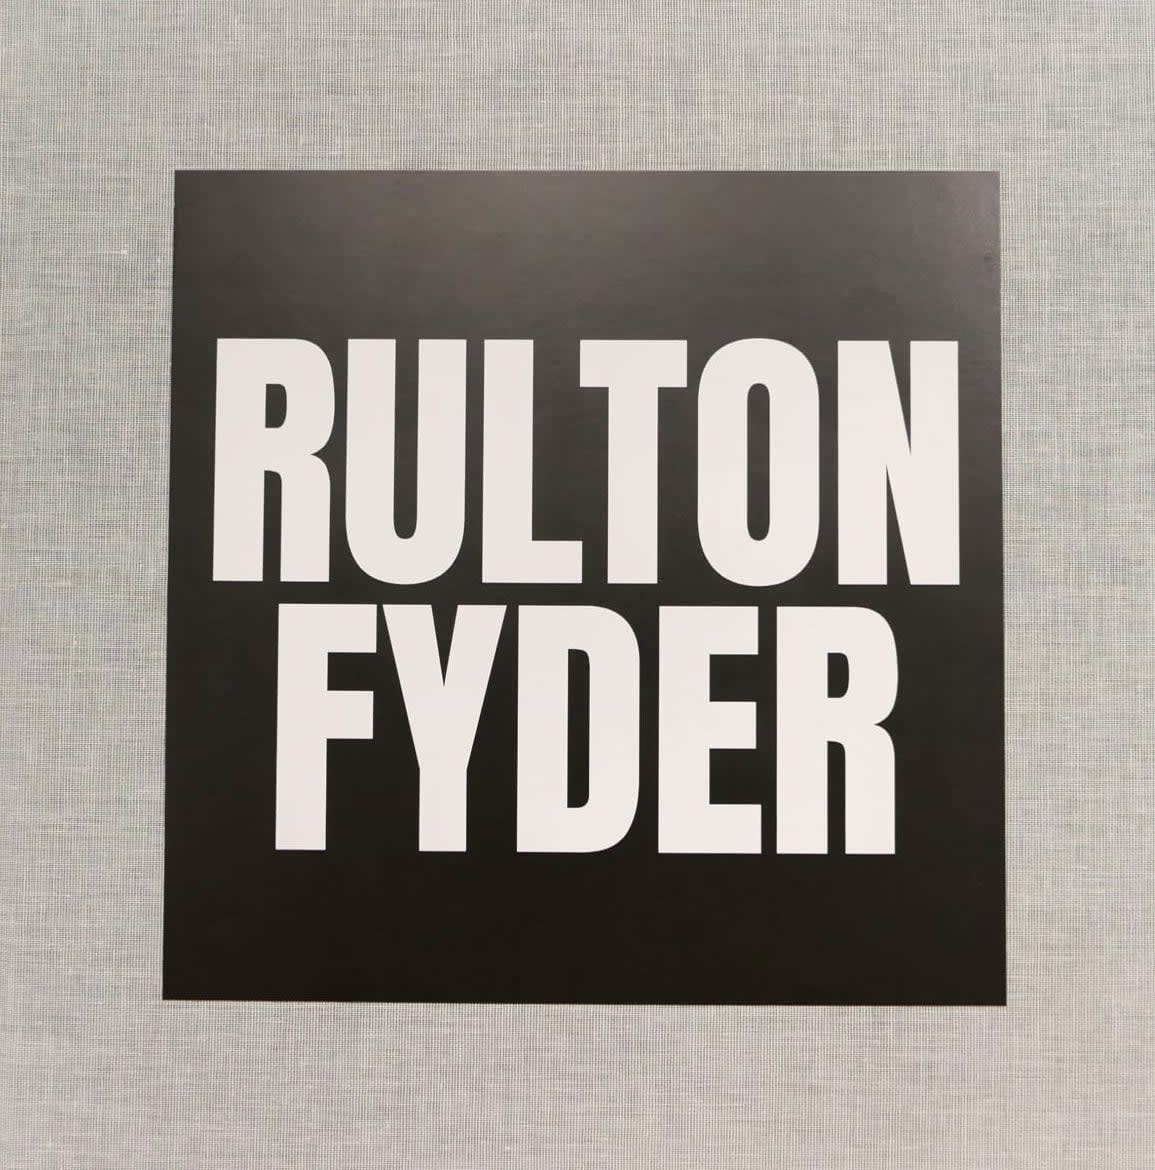 Rulton Fyder - Capturing The Current Zeitgeist